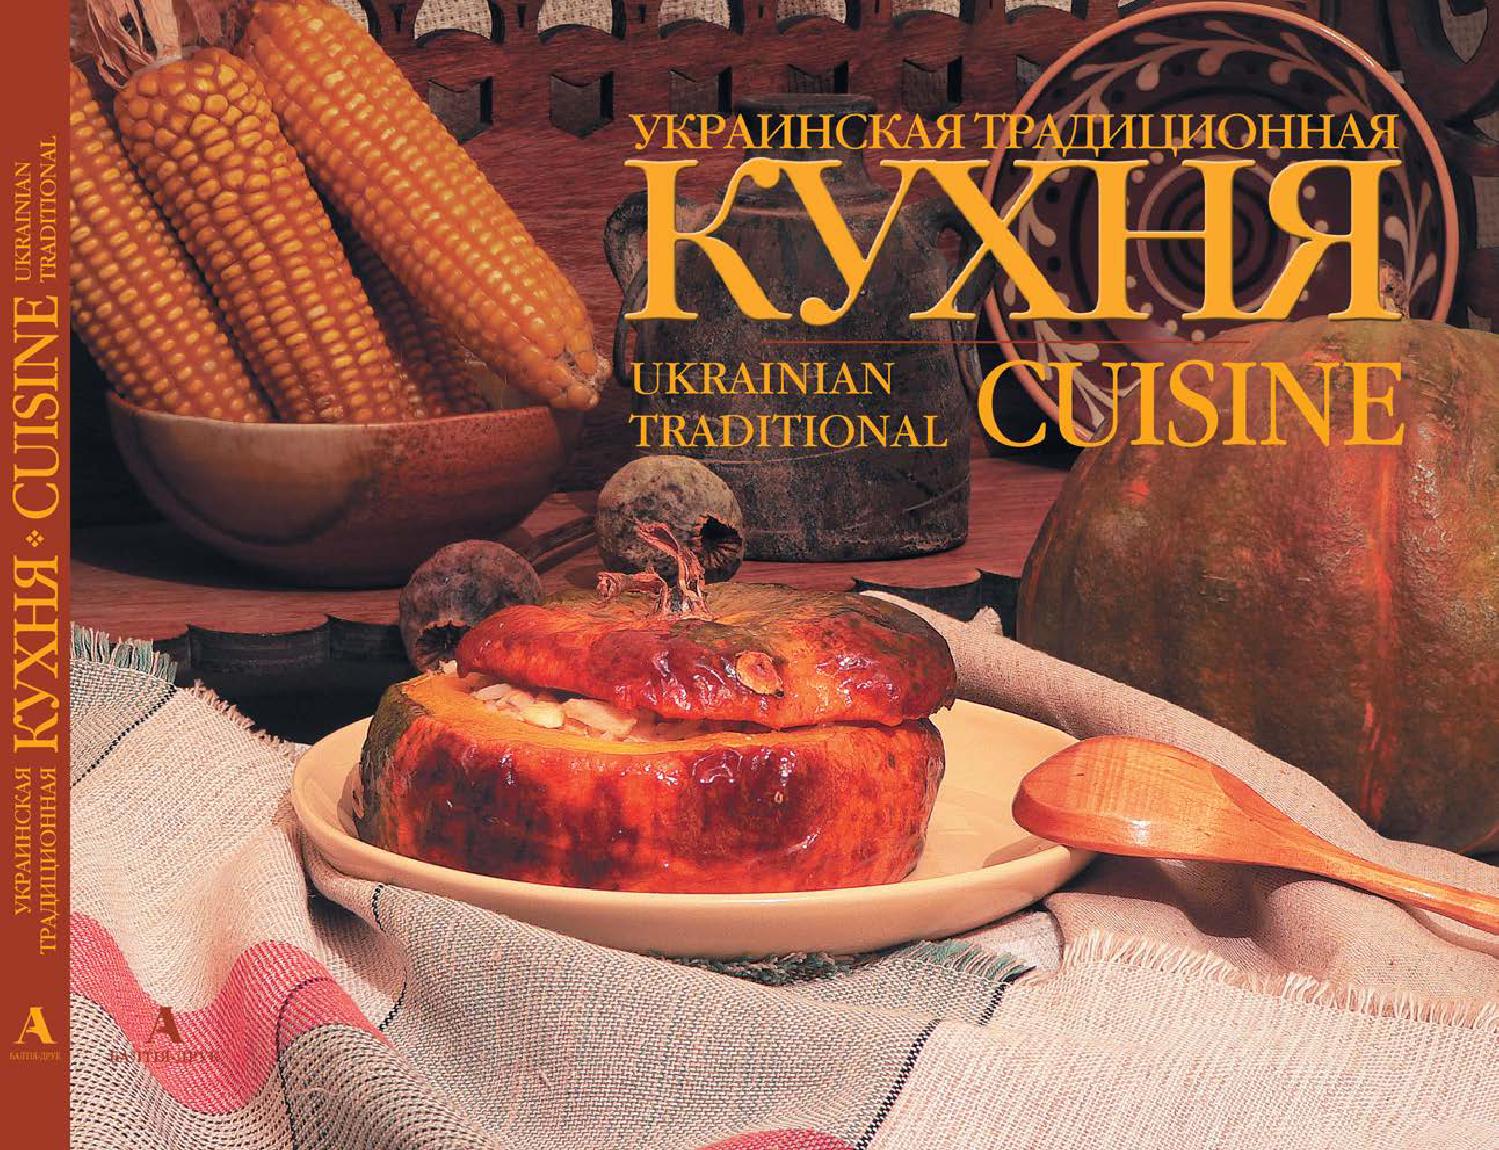 Ukrainian traditional cuisine by Lidia Artiukh